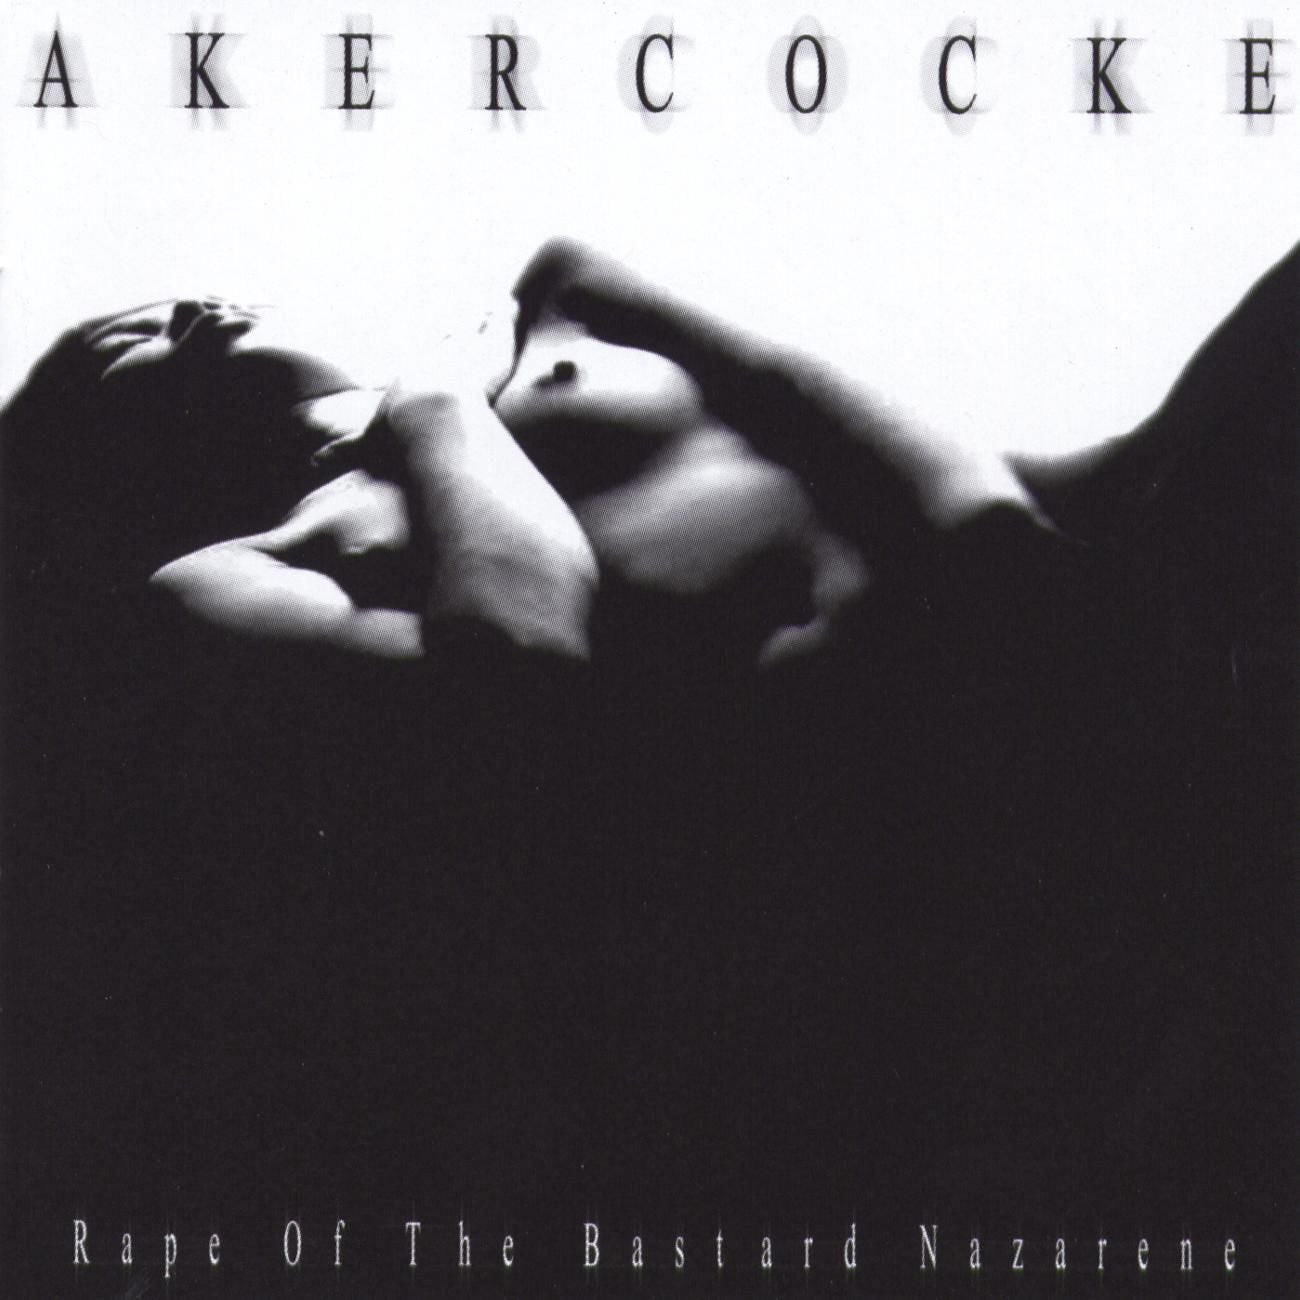 Akercocke "Rape Of The Bastard Nazarene" CD